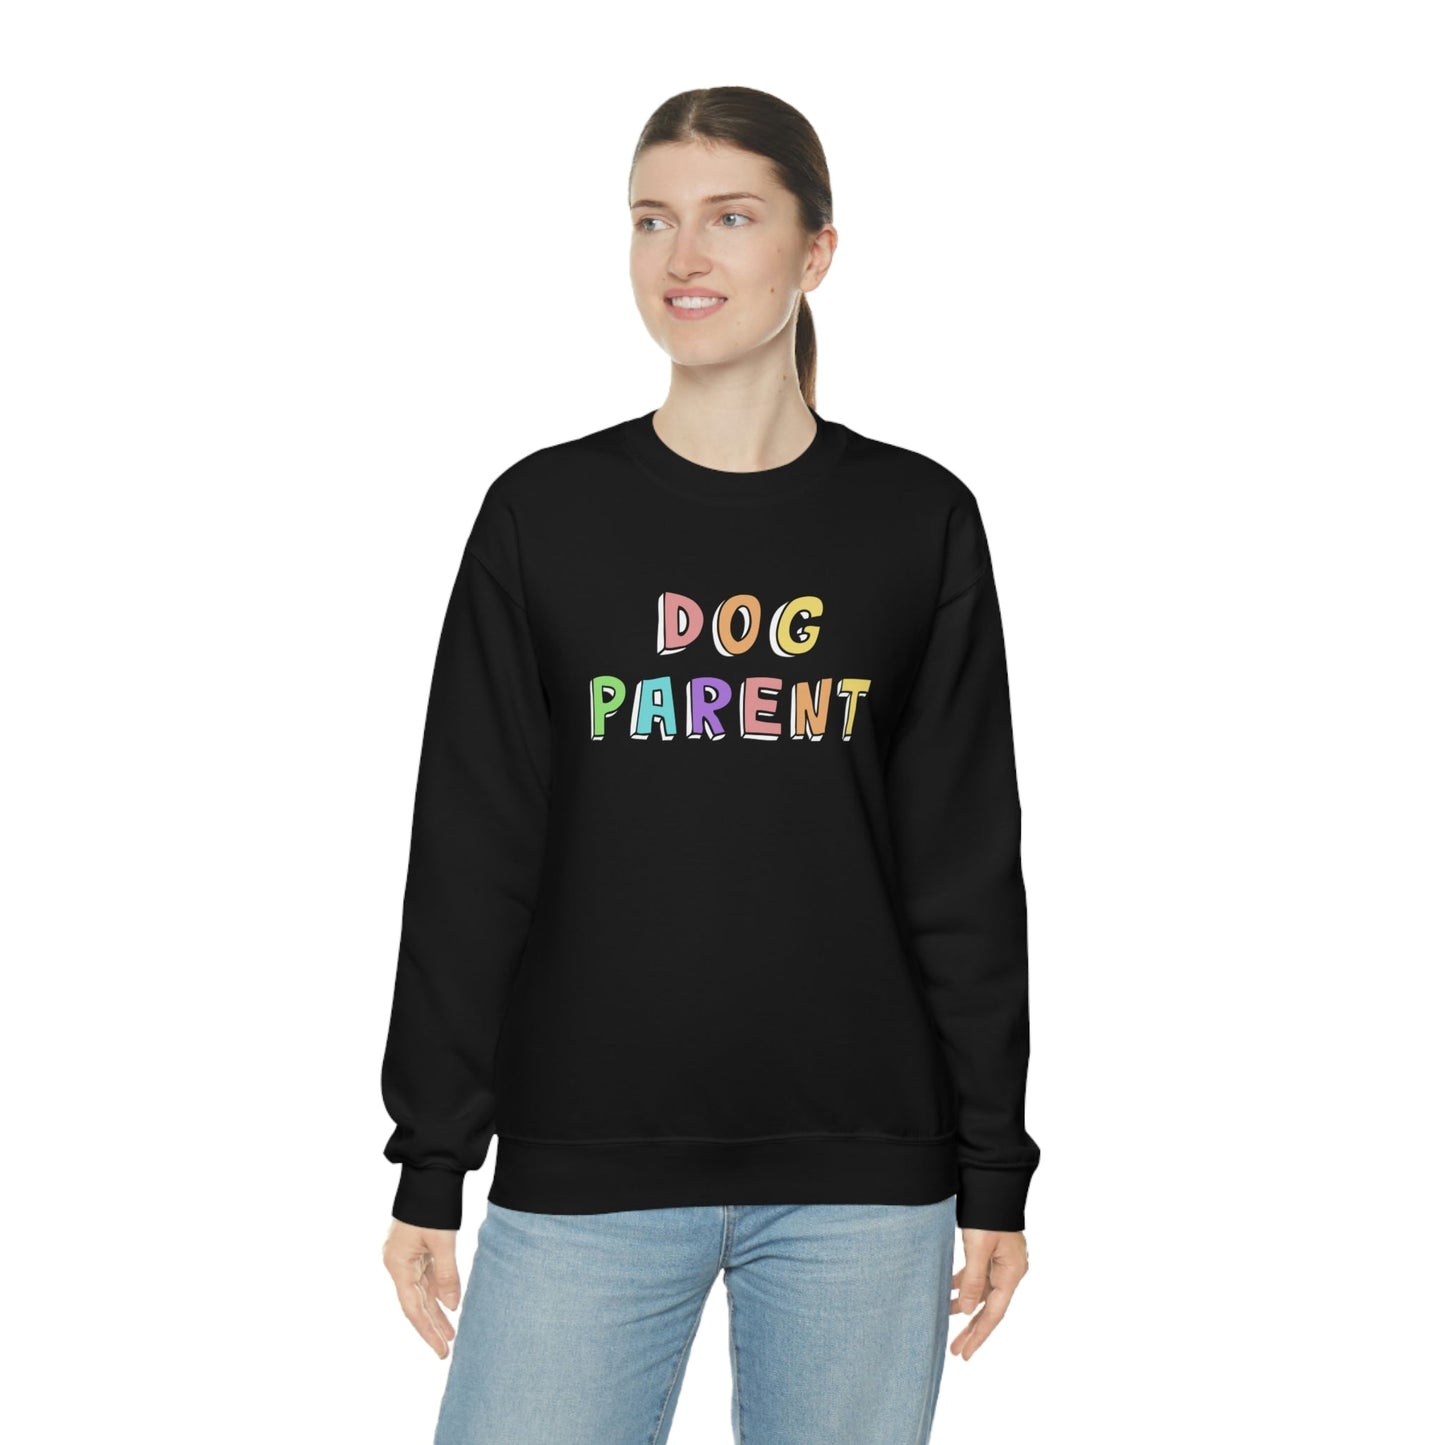 Dog Parent | Crewneck Sweatshirt - Detezi Designs-29299848445875443742